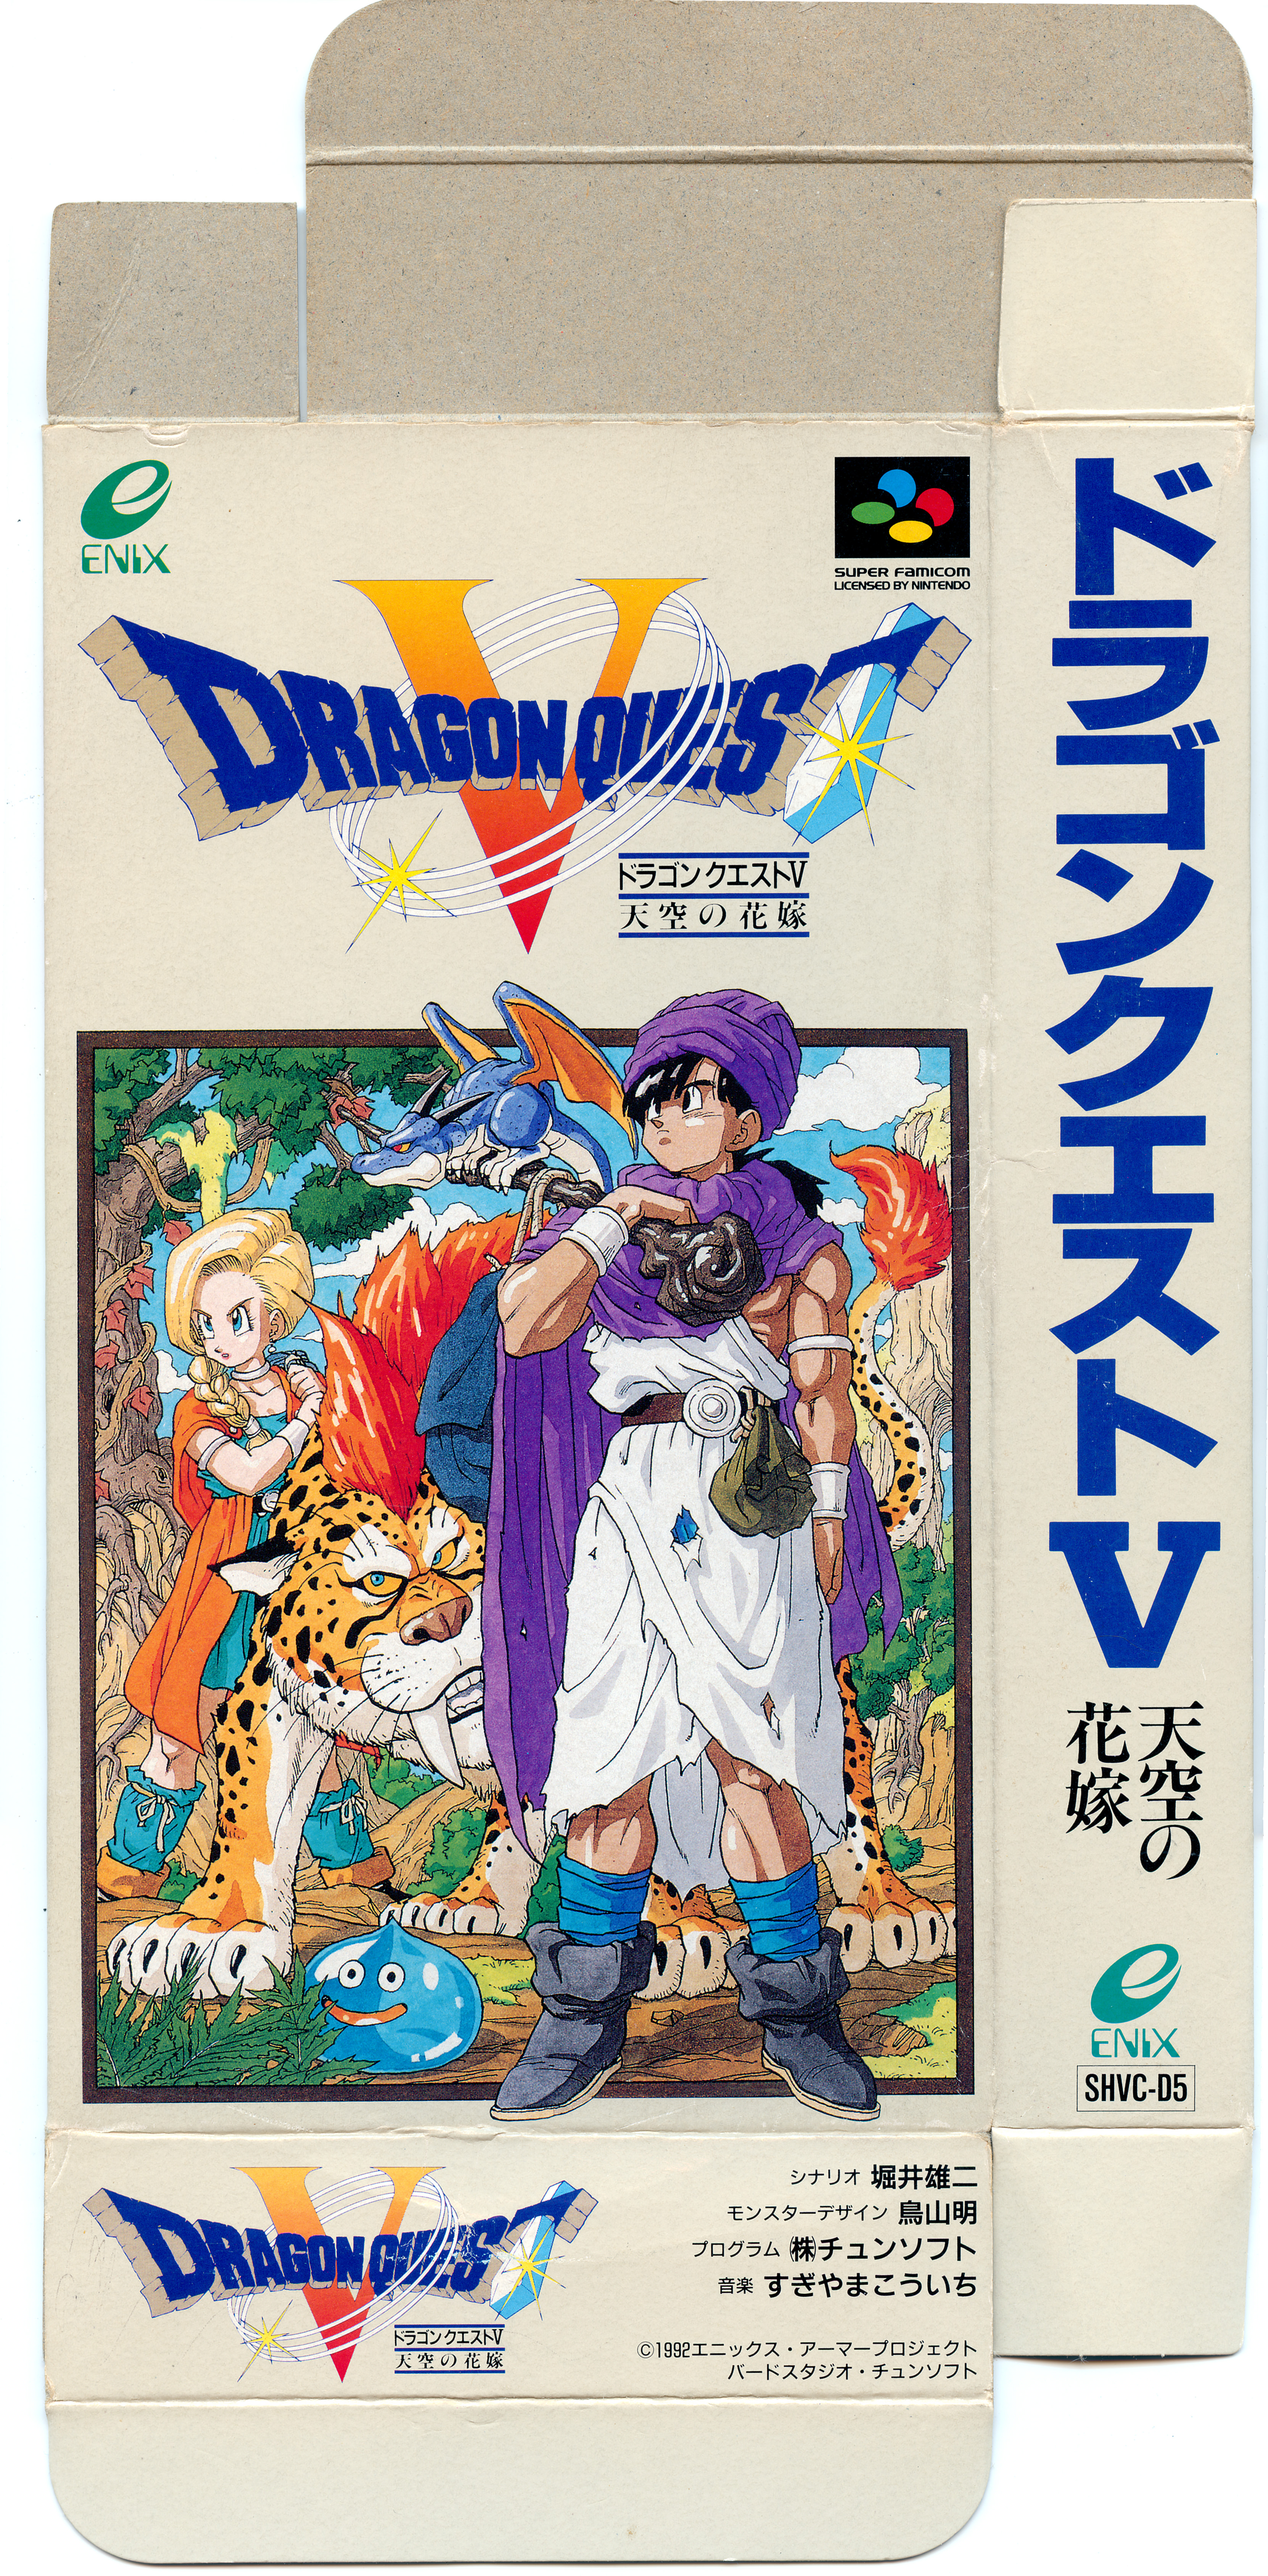 Dragon Quest V [SHVC-D5] (Super Famicom) - Box, Cart, Manual Scans  (1600DPI) : Enix : Free Download, Borrow, and Streaming : Internet Archive